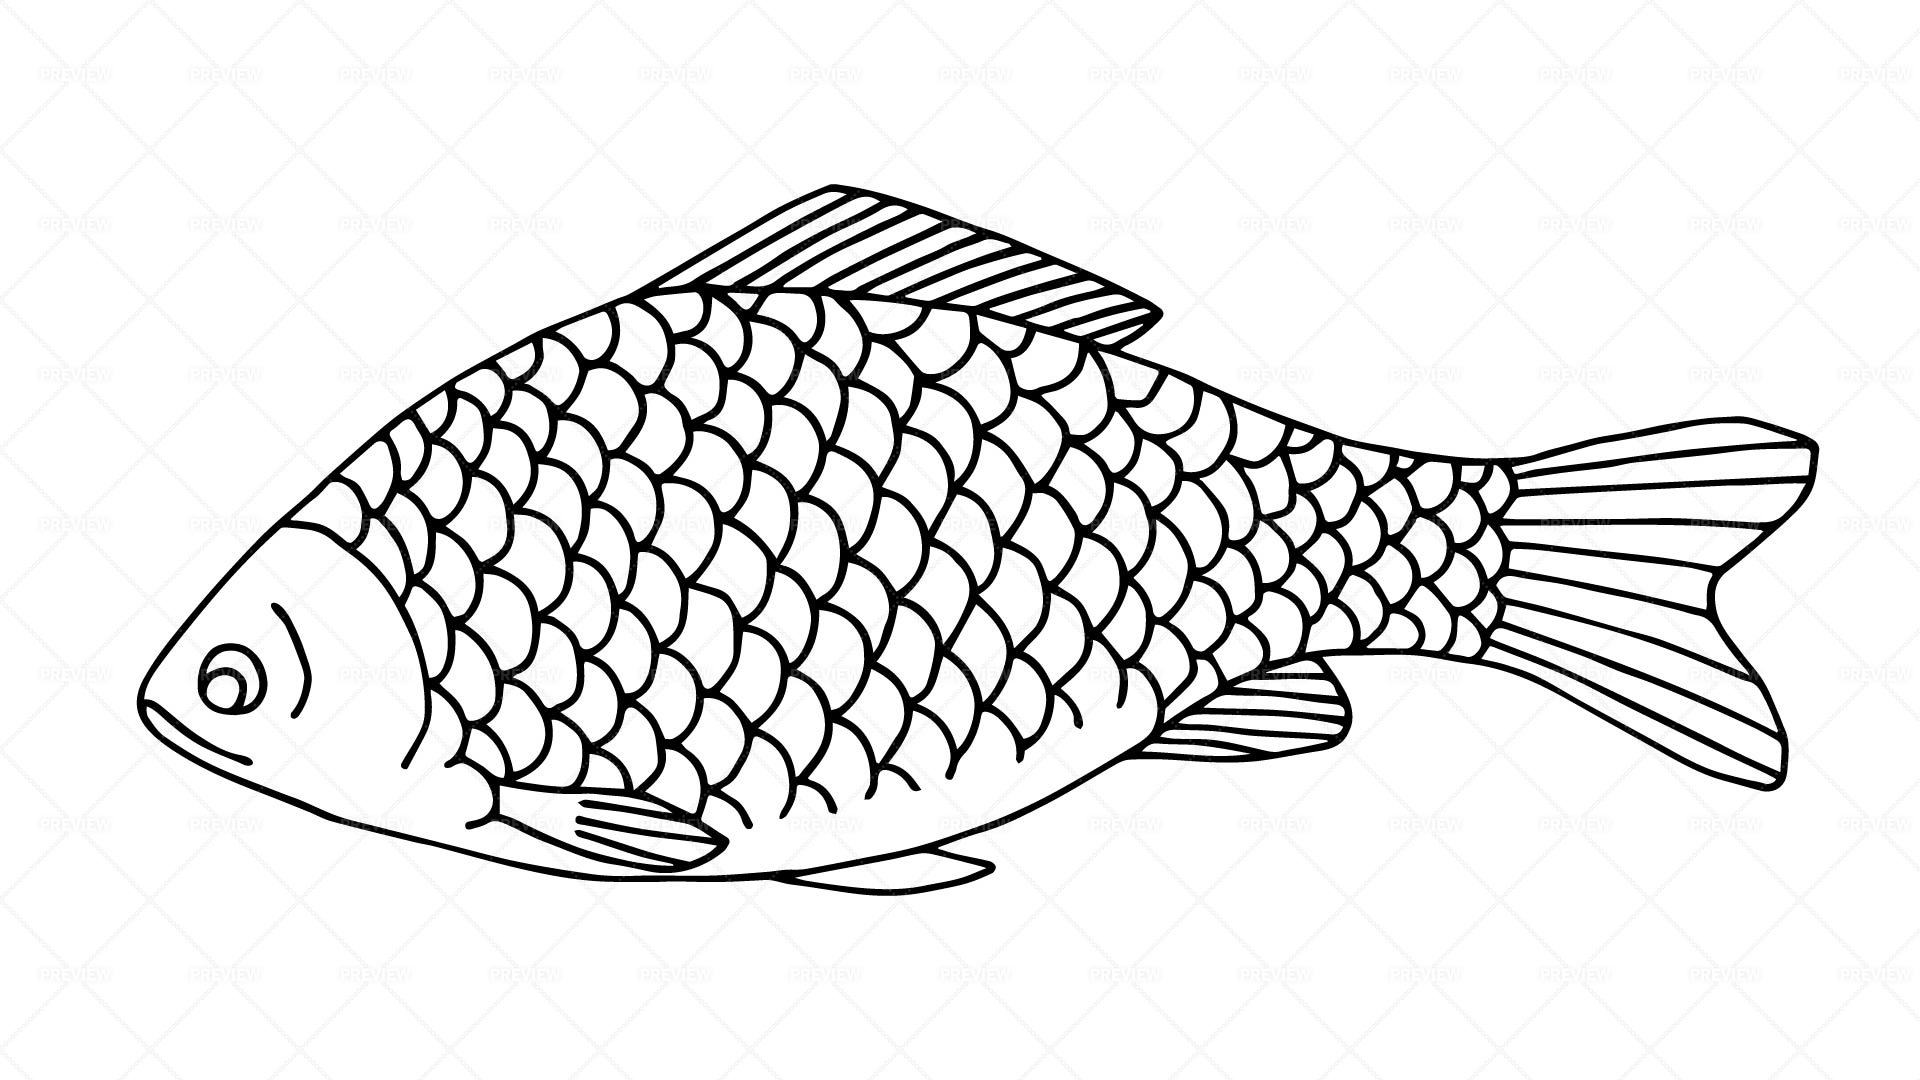 Bull Shark Outline | Simple Fish Drawing